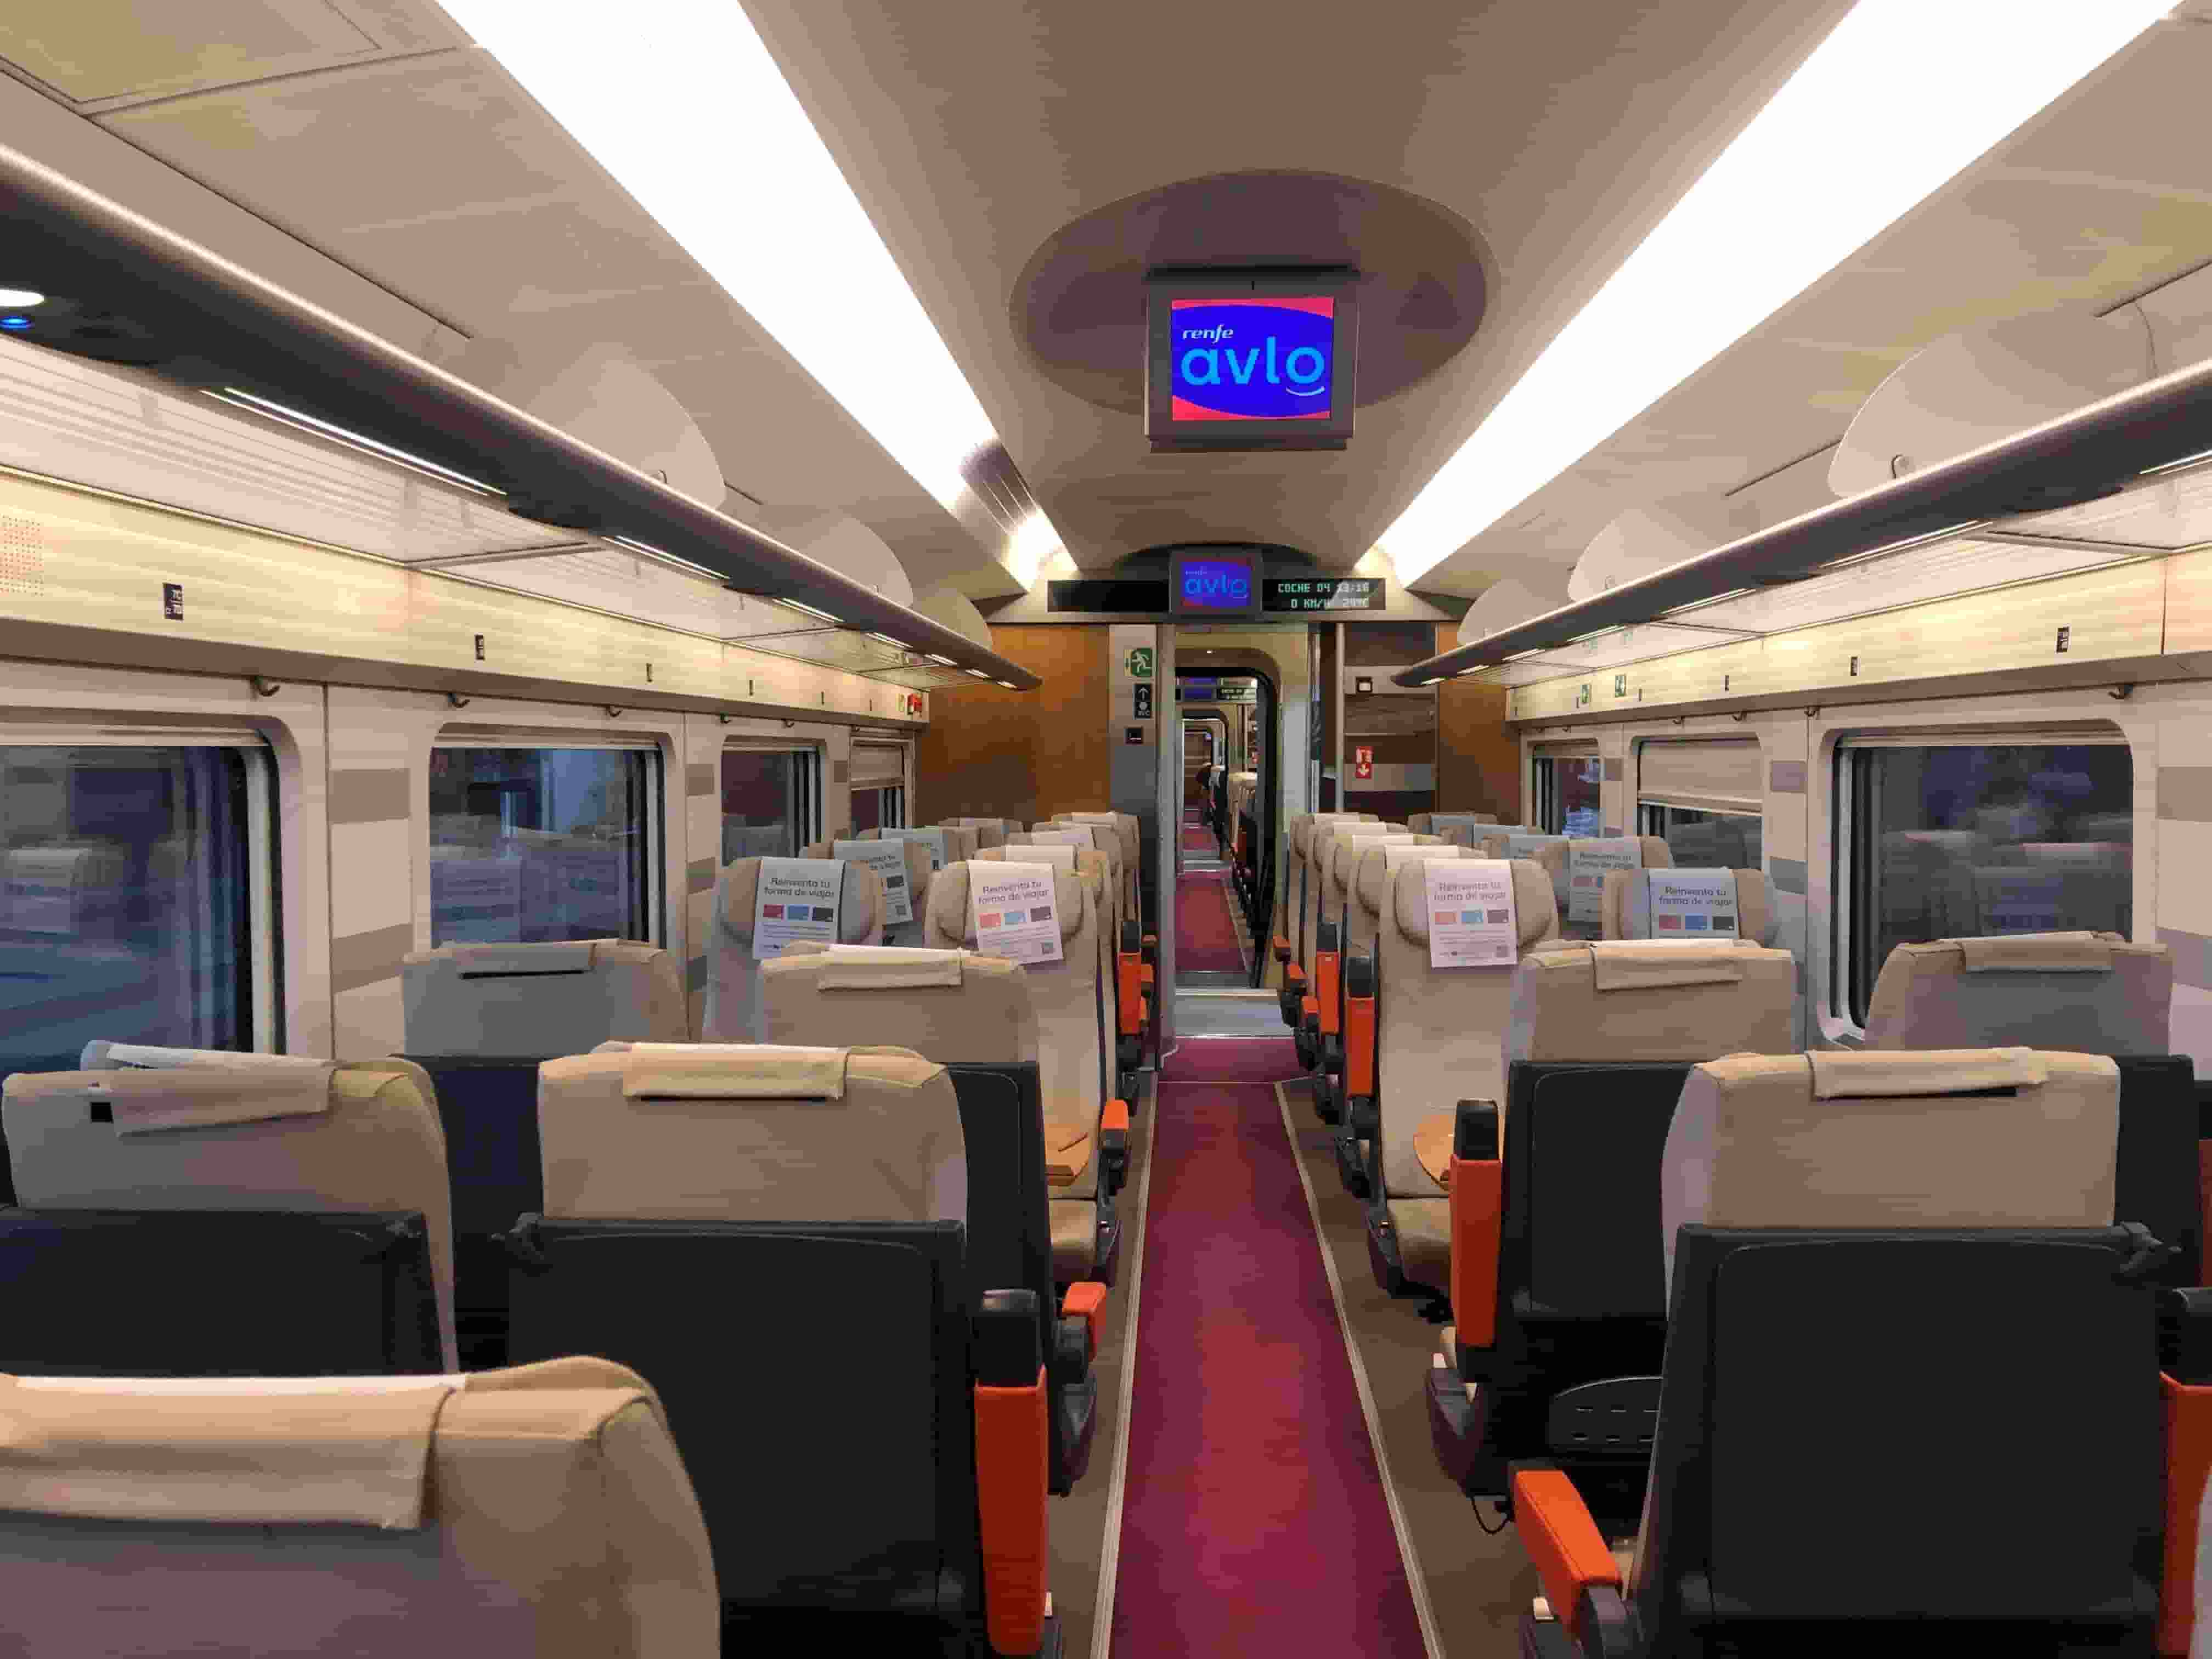 Interior of Avlo train economy class seating